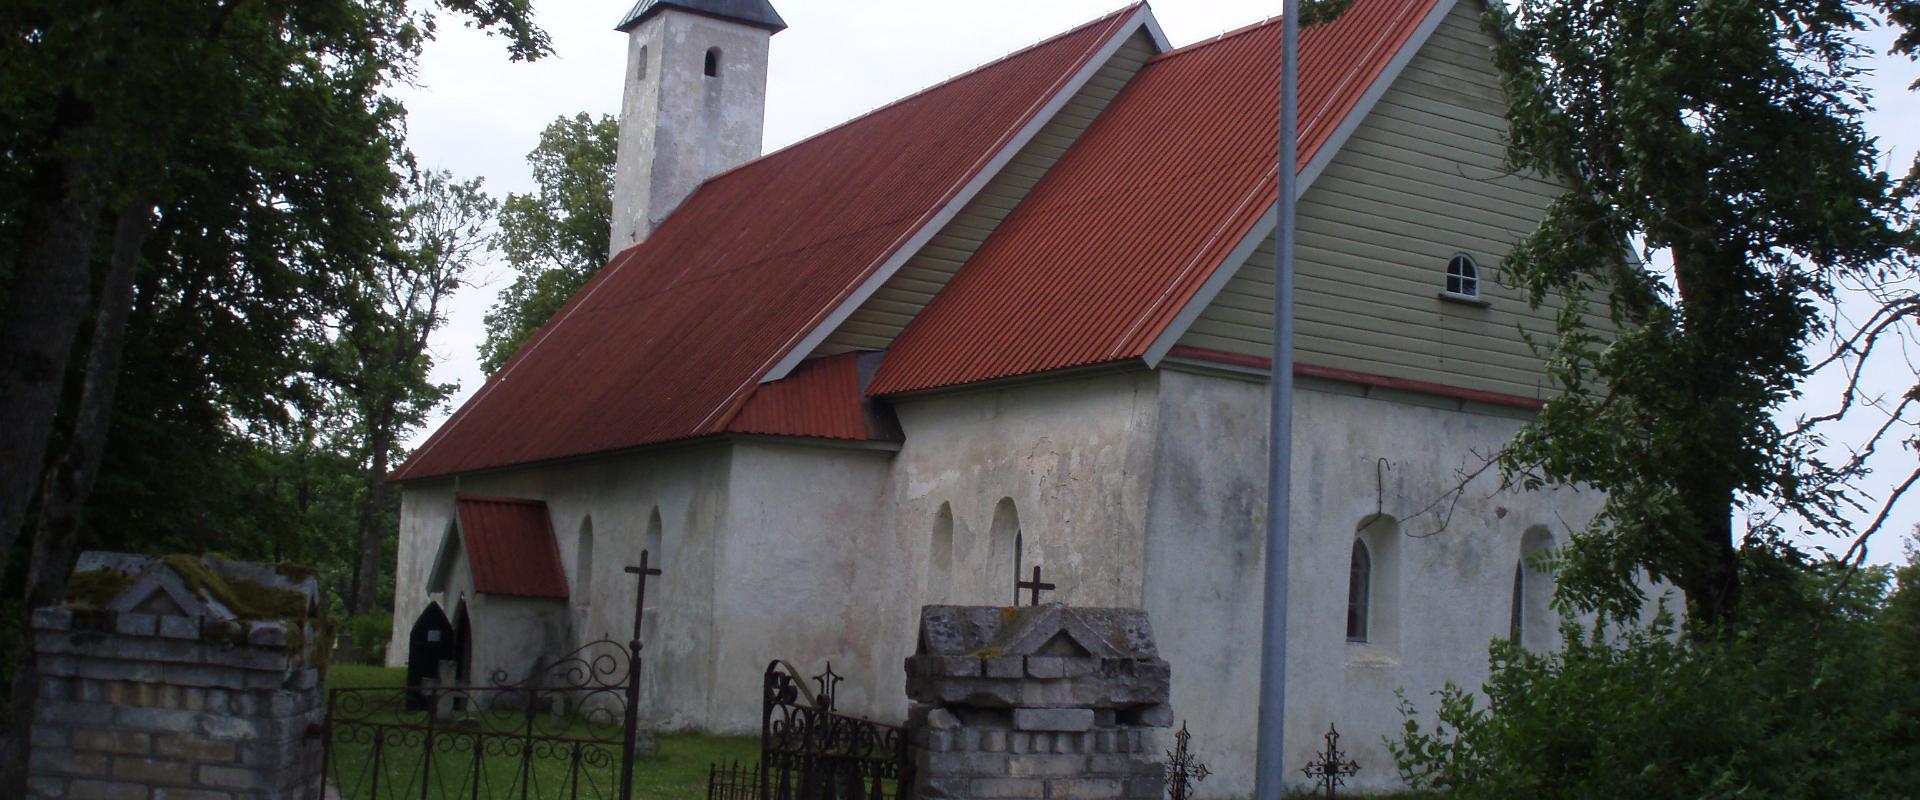 Noarootsi Church